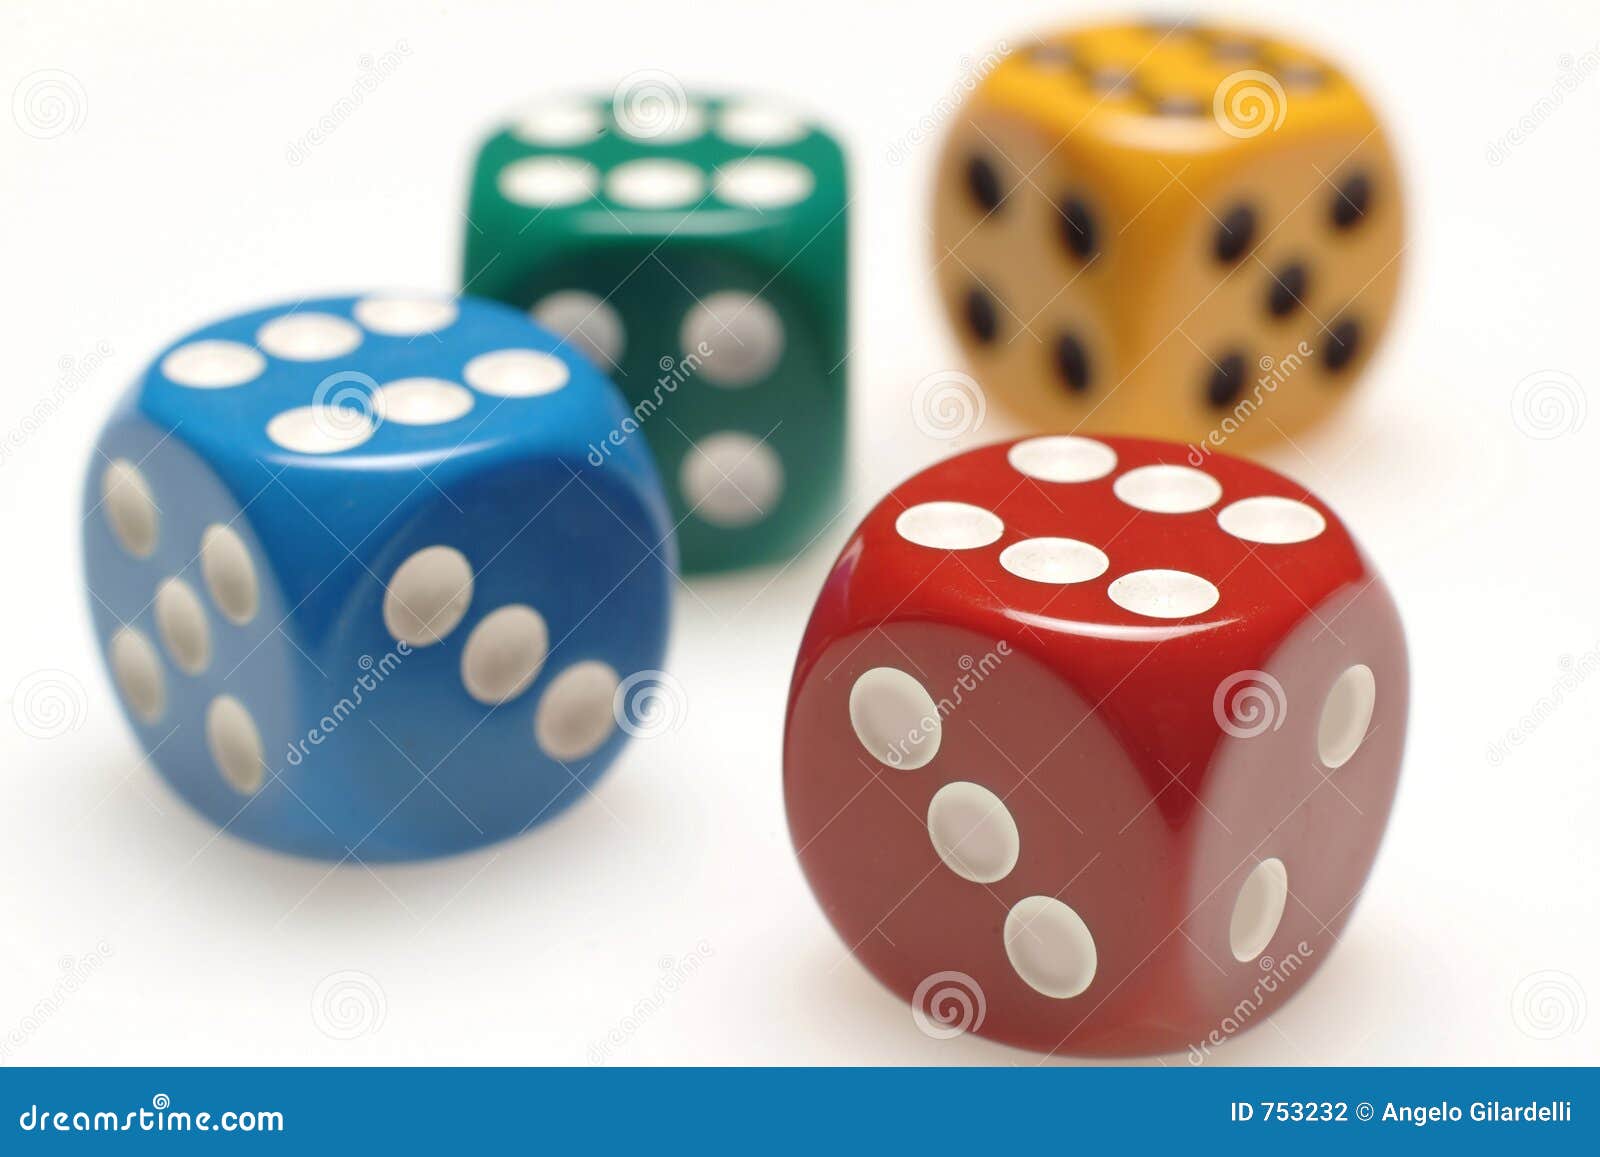 Four dice